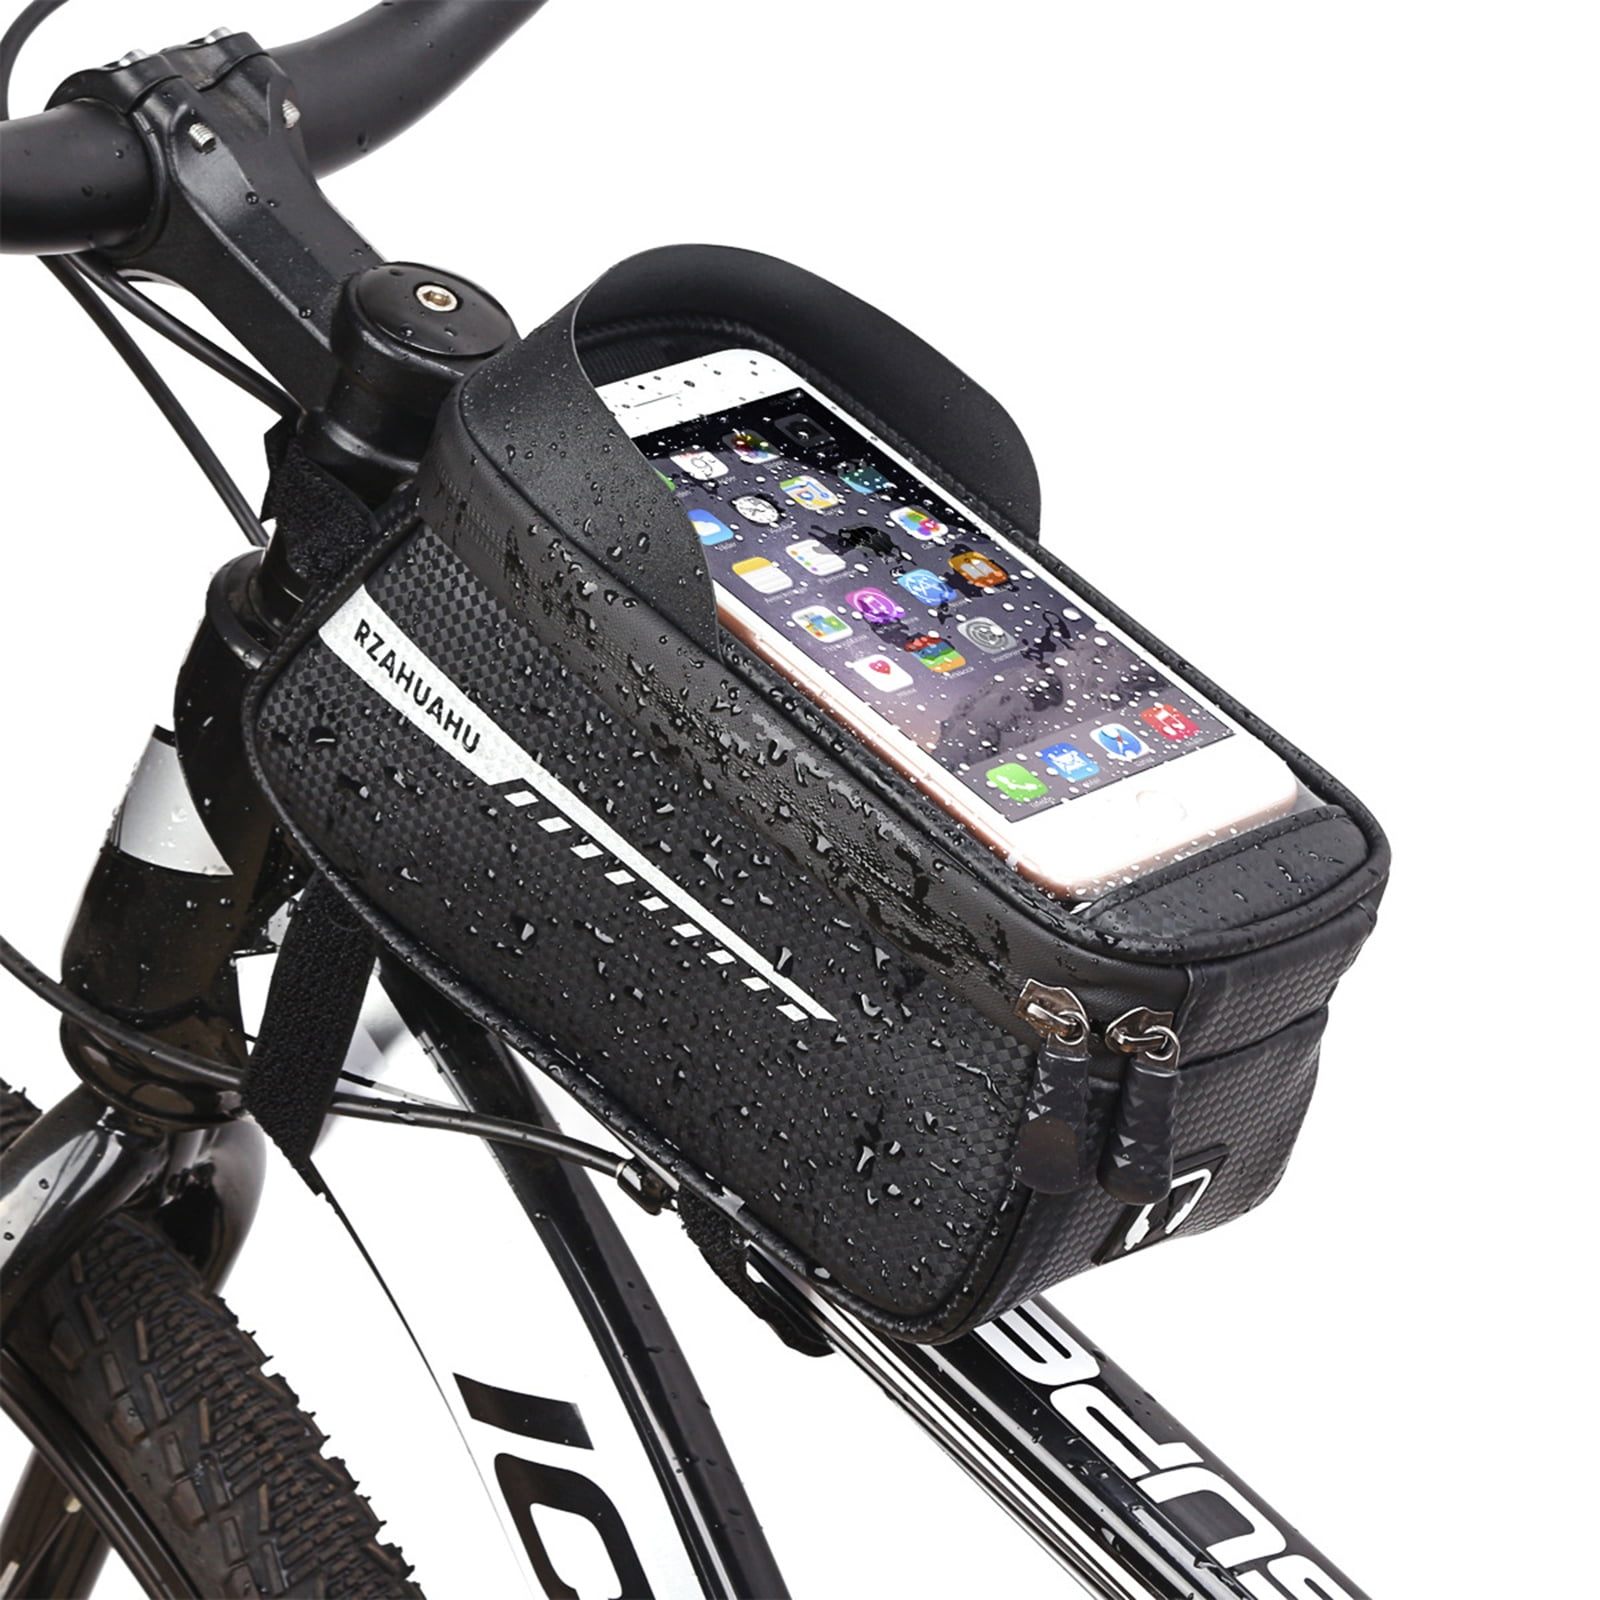 MTB Bicycle Cycling Bike Front Top Tube Frame Bag Phone Holder Case Waterproof